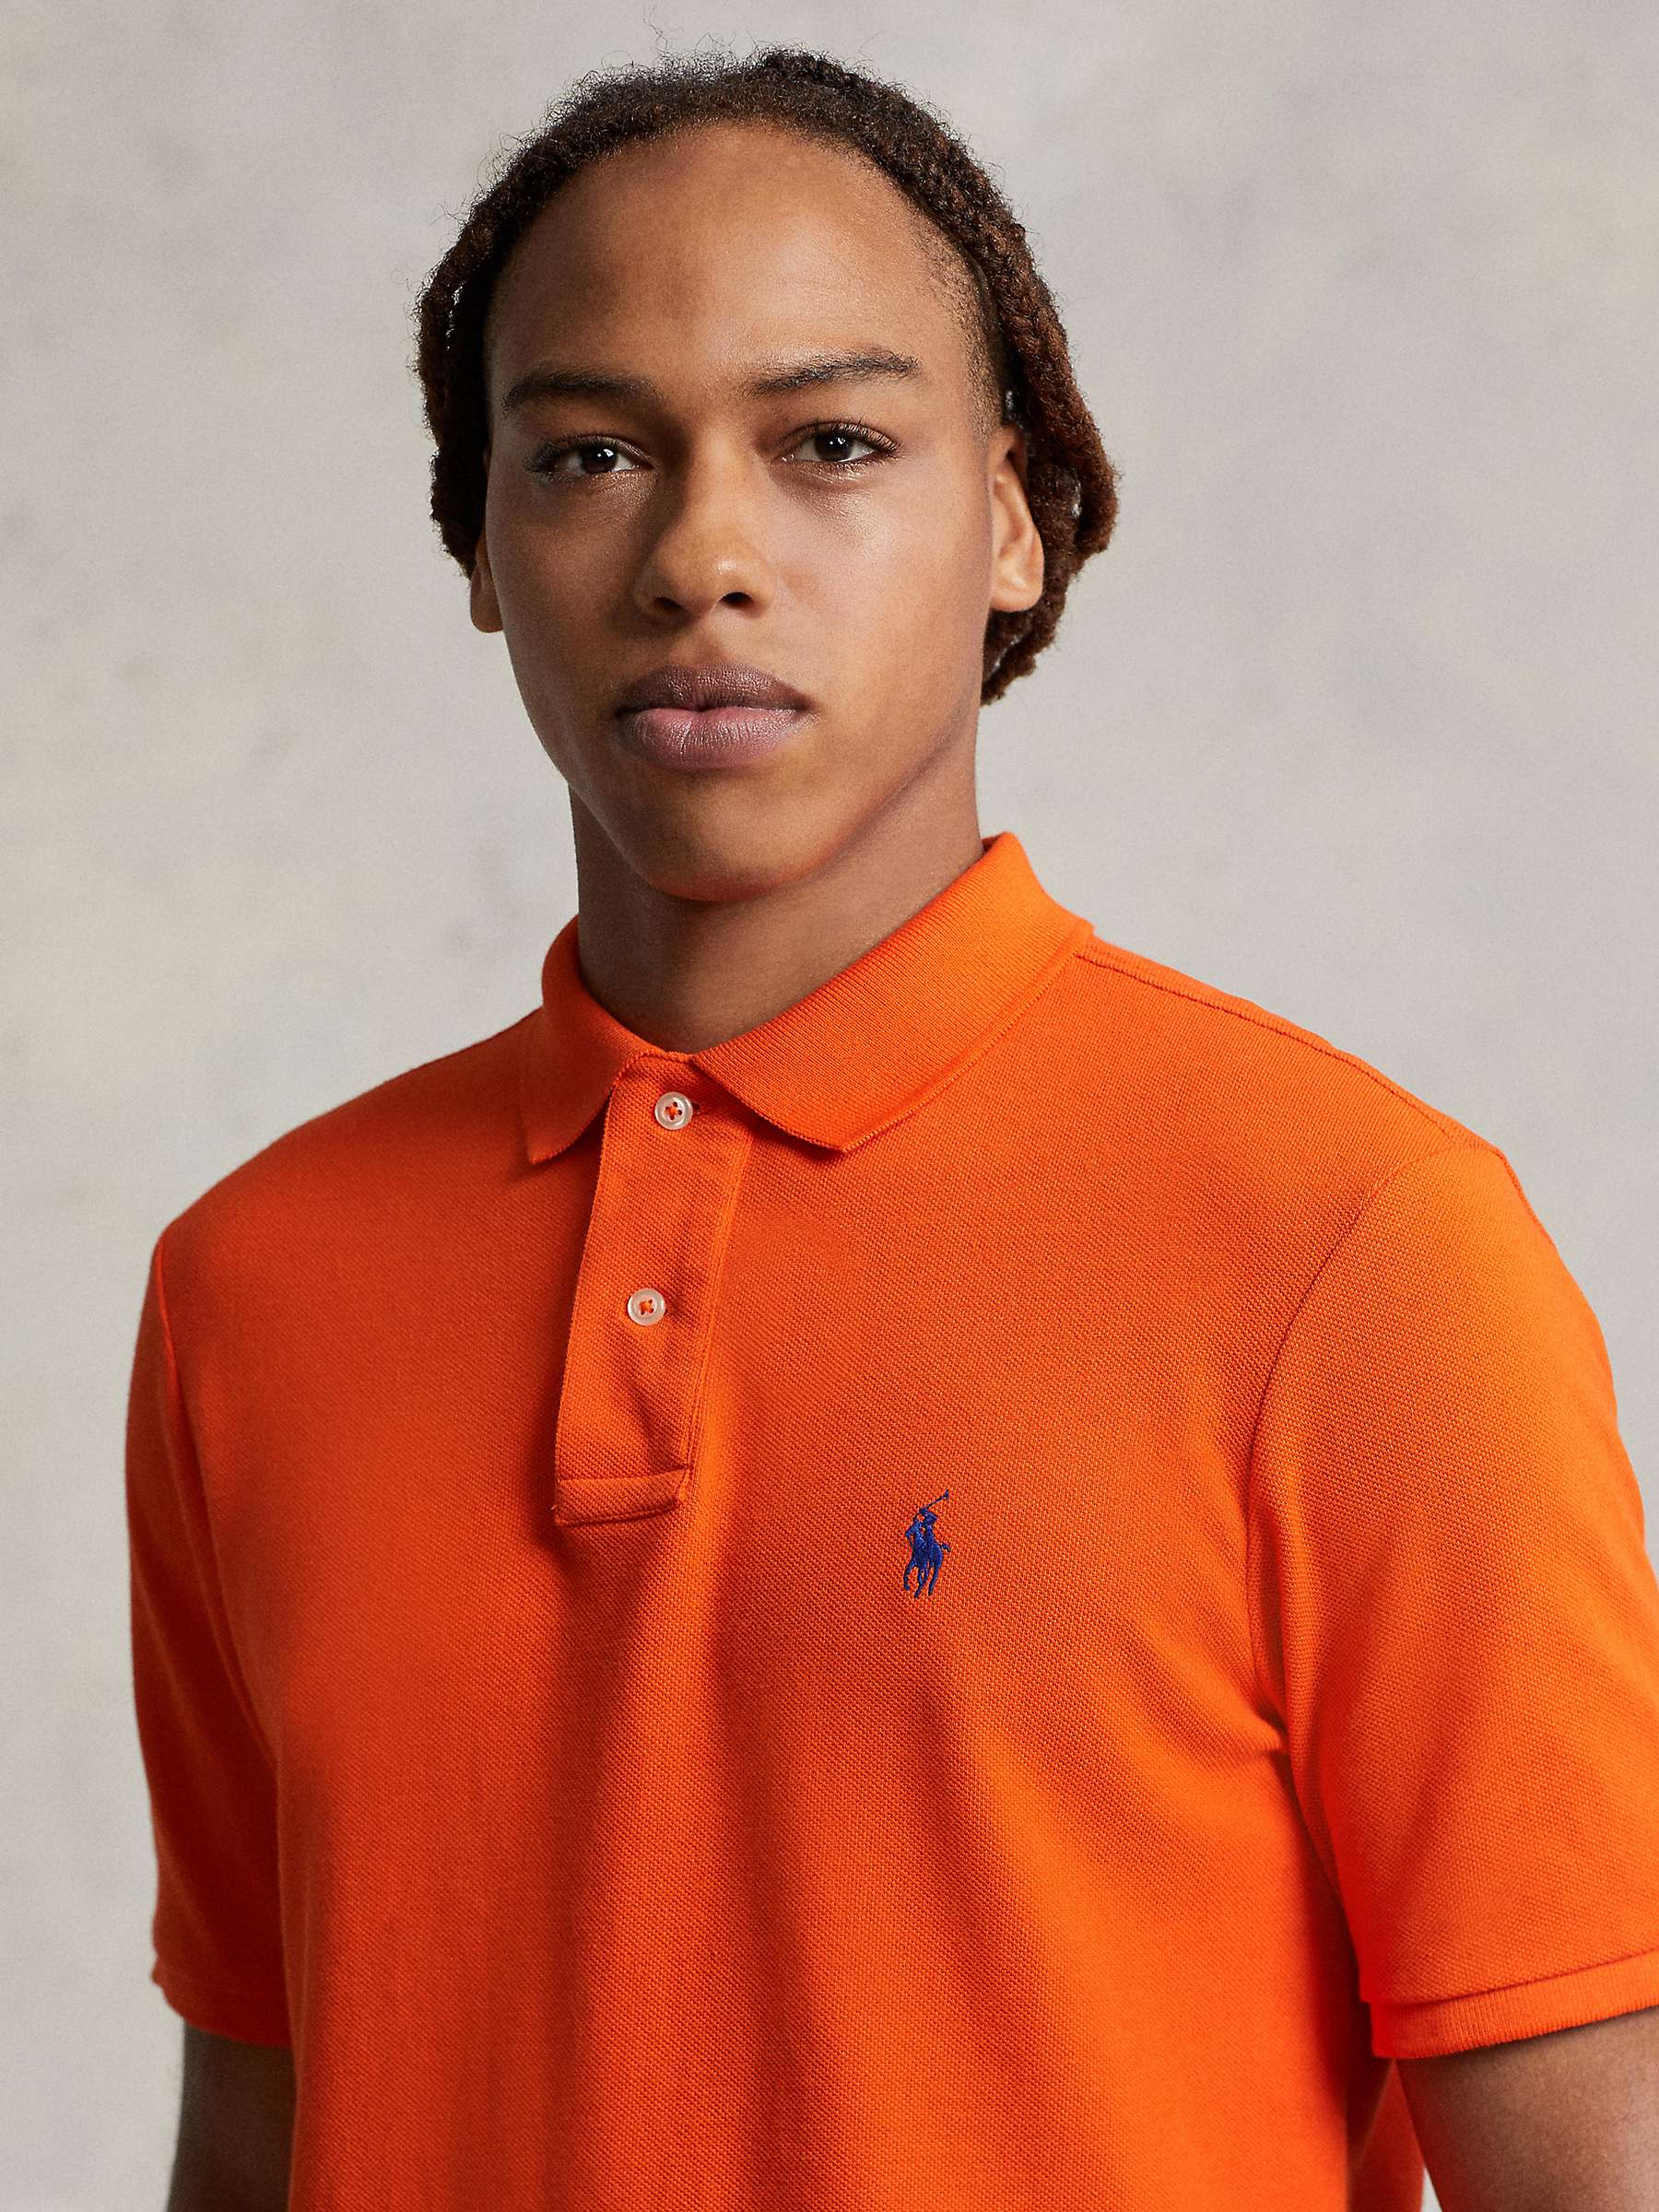 Buy Polo Ralph Lauren Short Sleeve Custom Slim Fit Polo Shirt Online at johnlewis.com